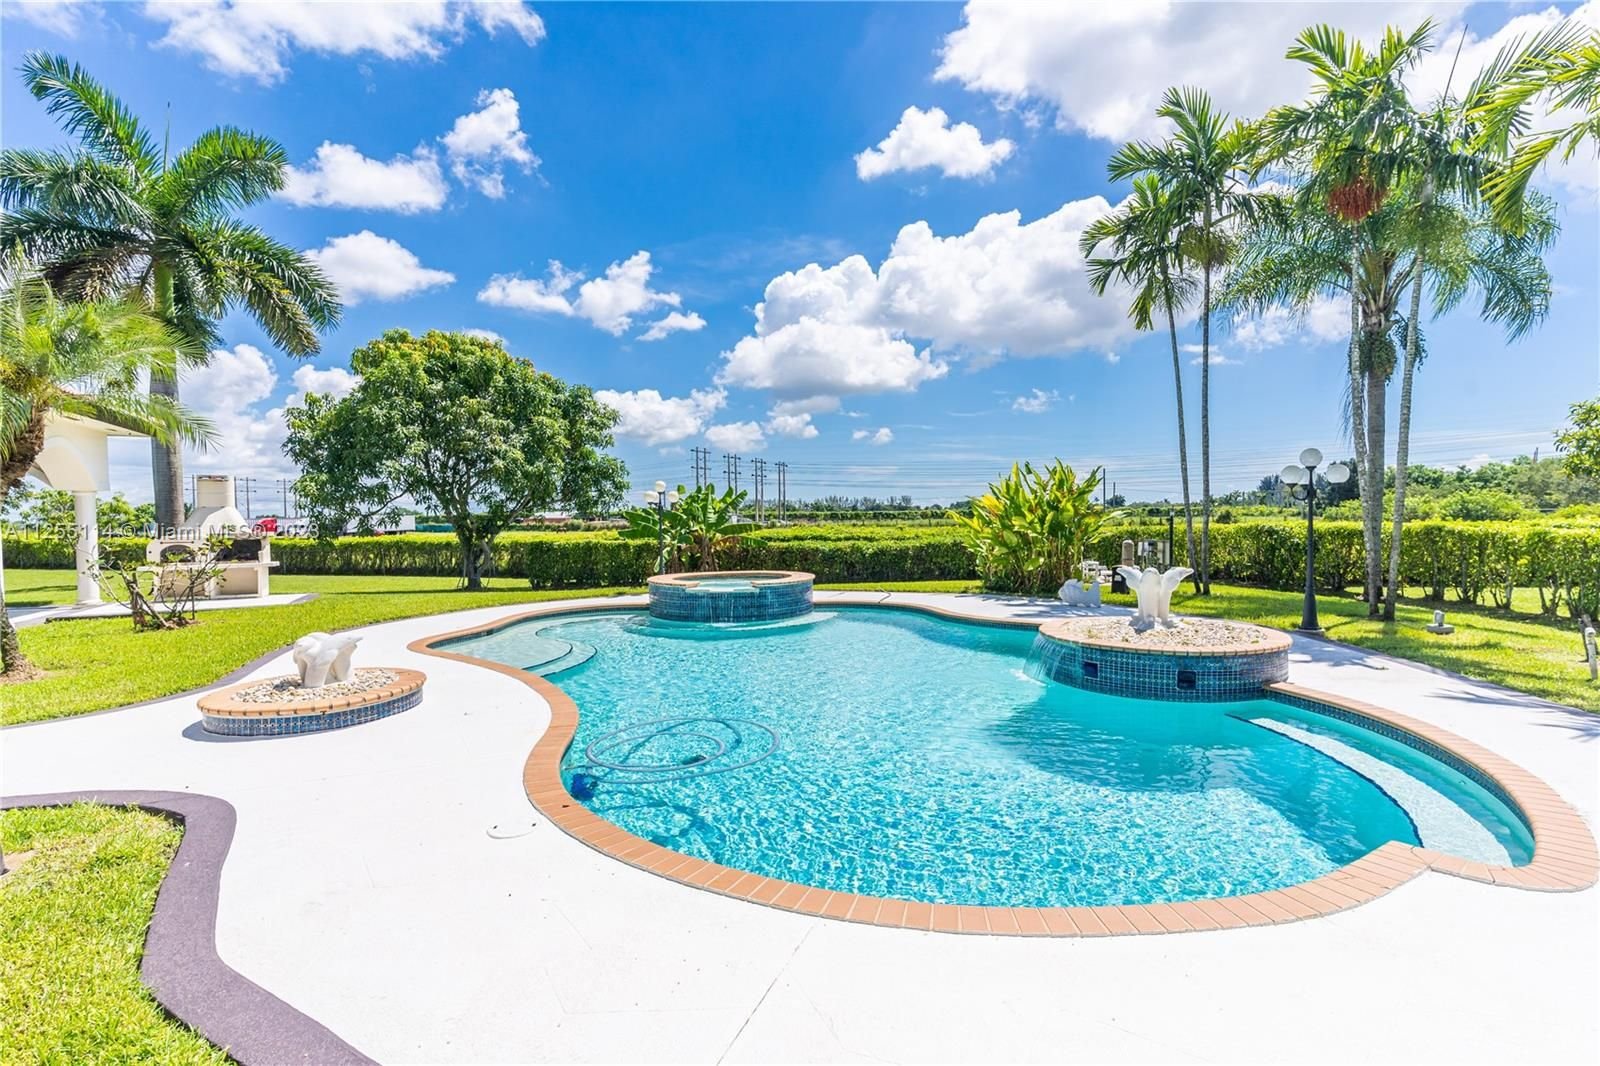 Real estate property located at 20581 140th Ave, Miami-Dade County, Miami, FL